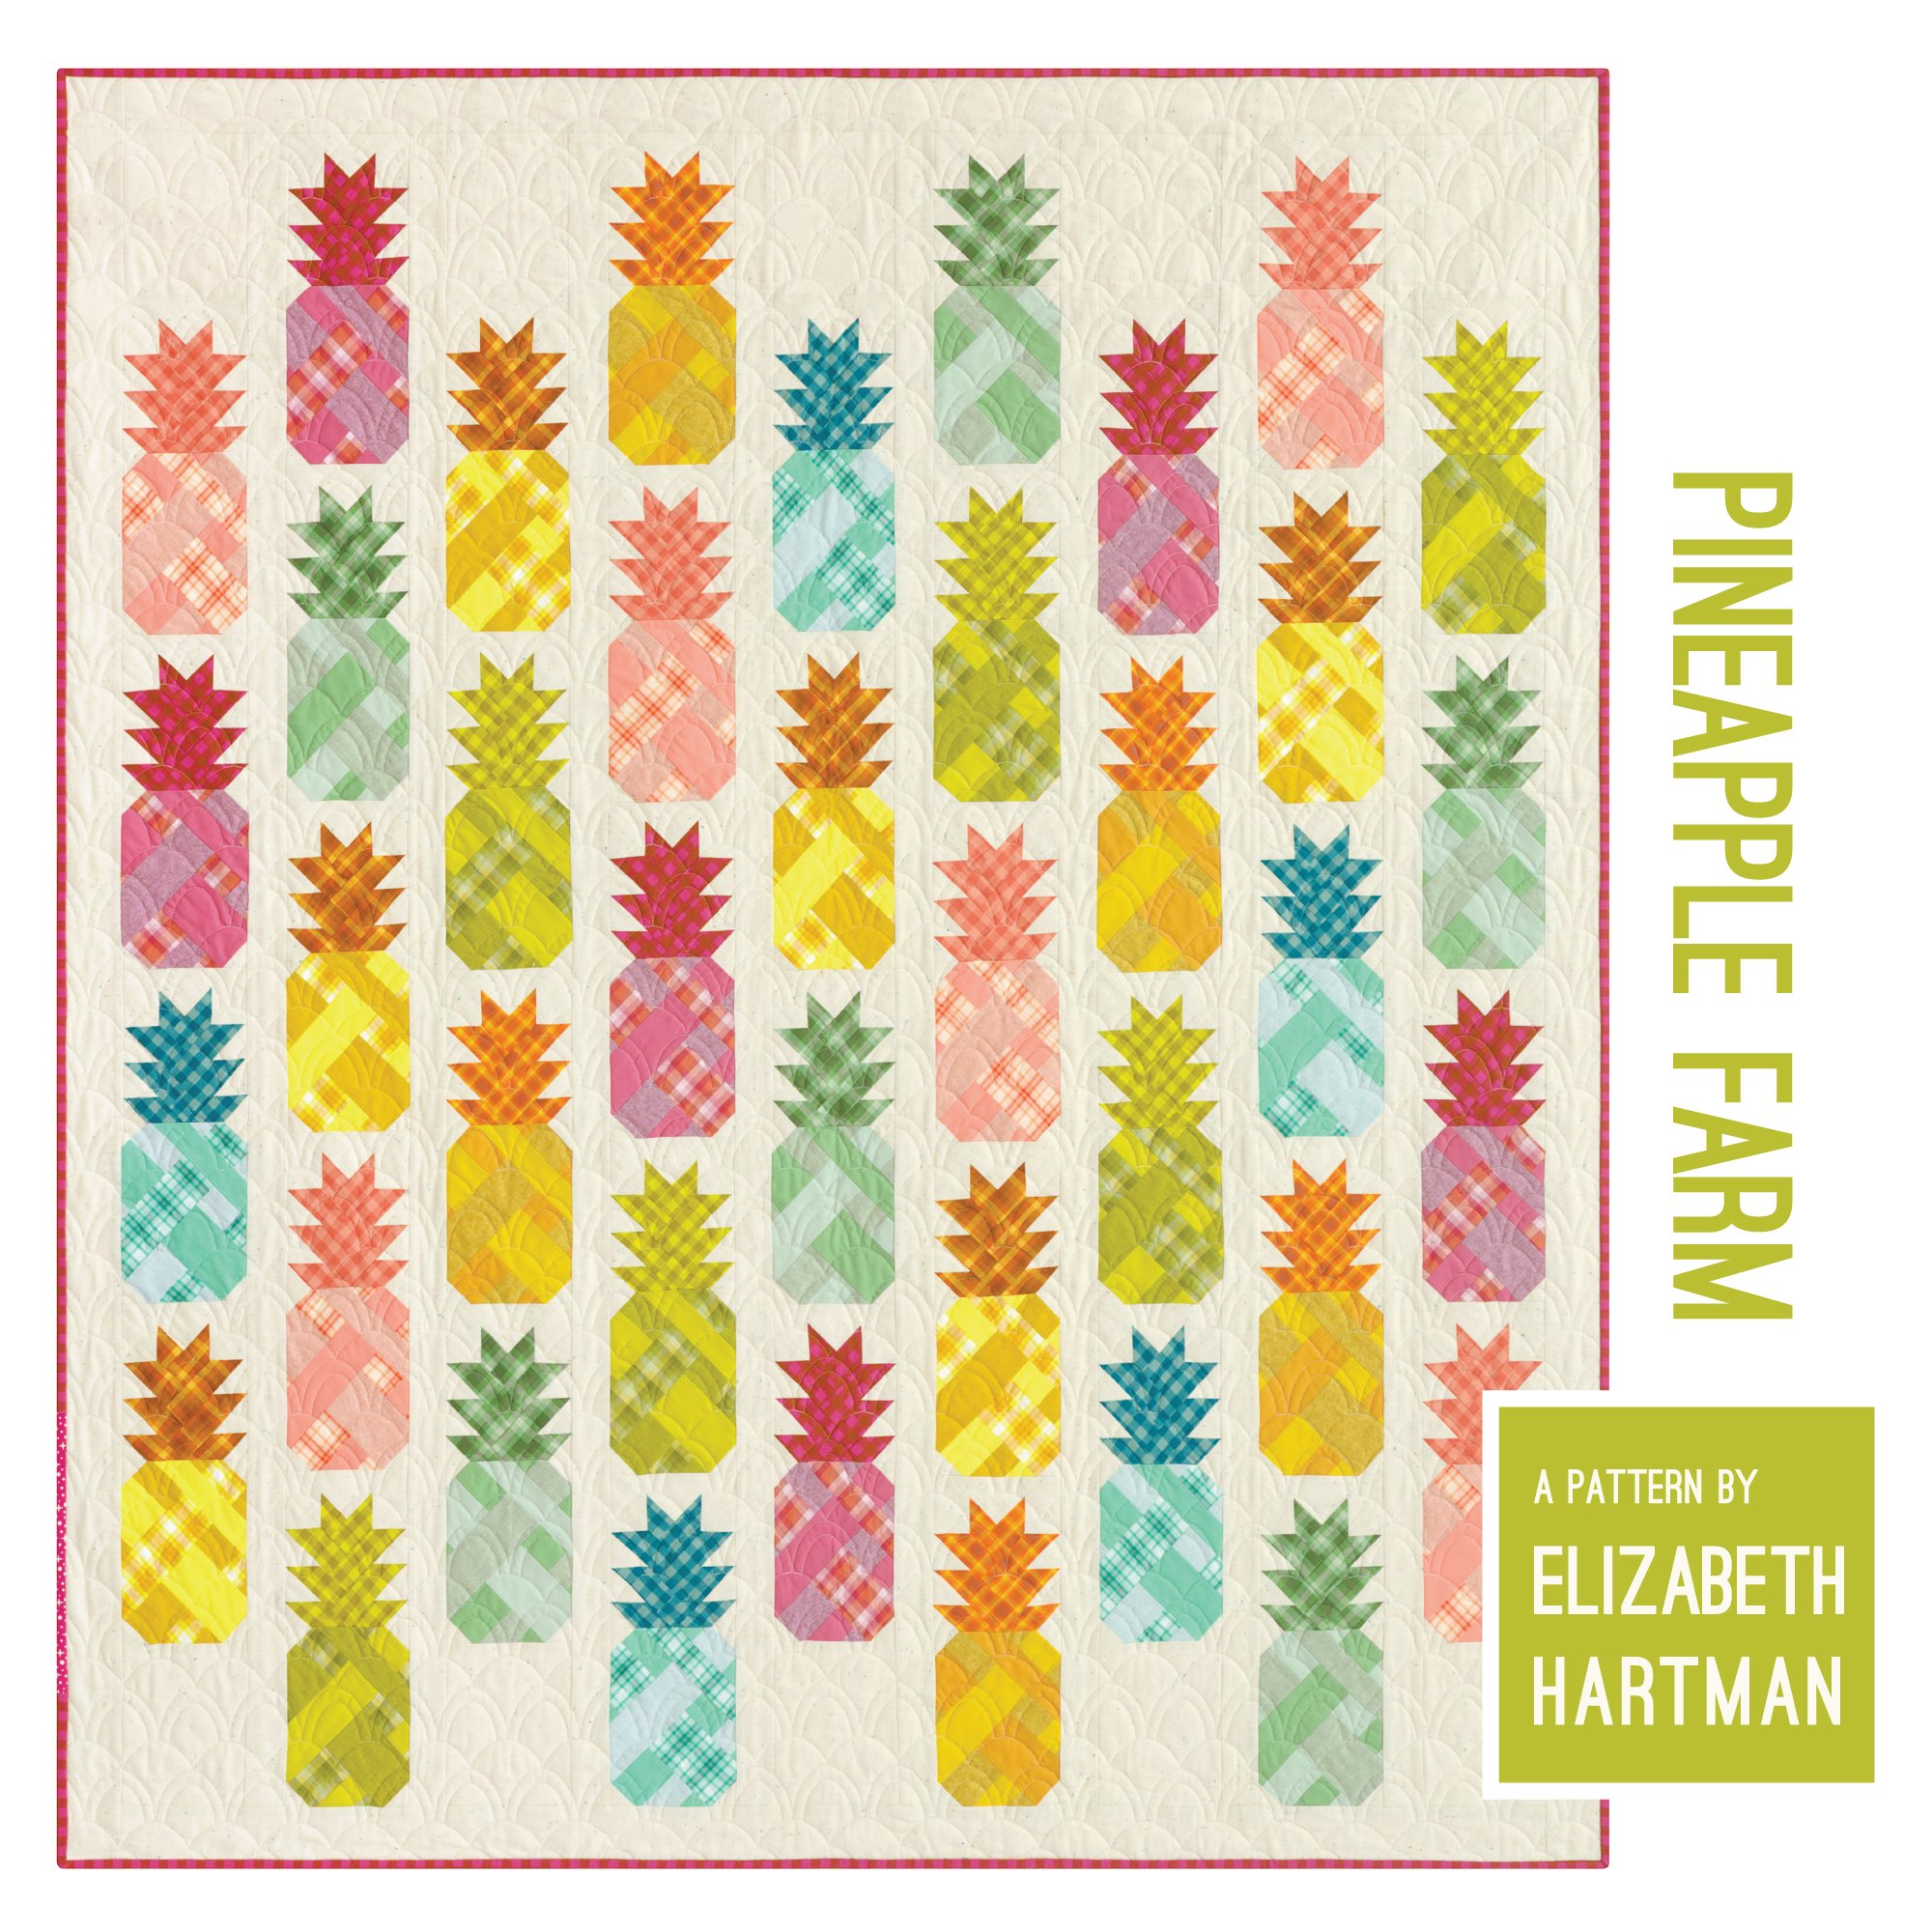 NEW PATTERNS & FABRIC! — Patterns by Elizabeth Hartman